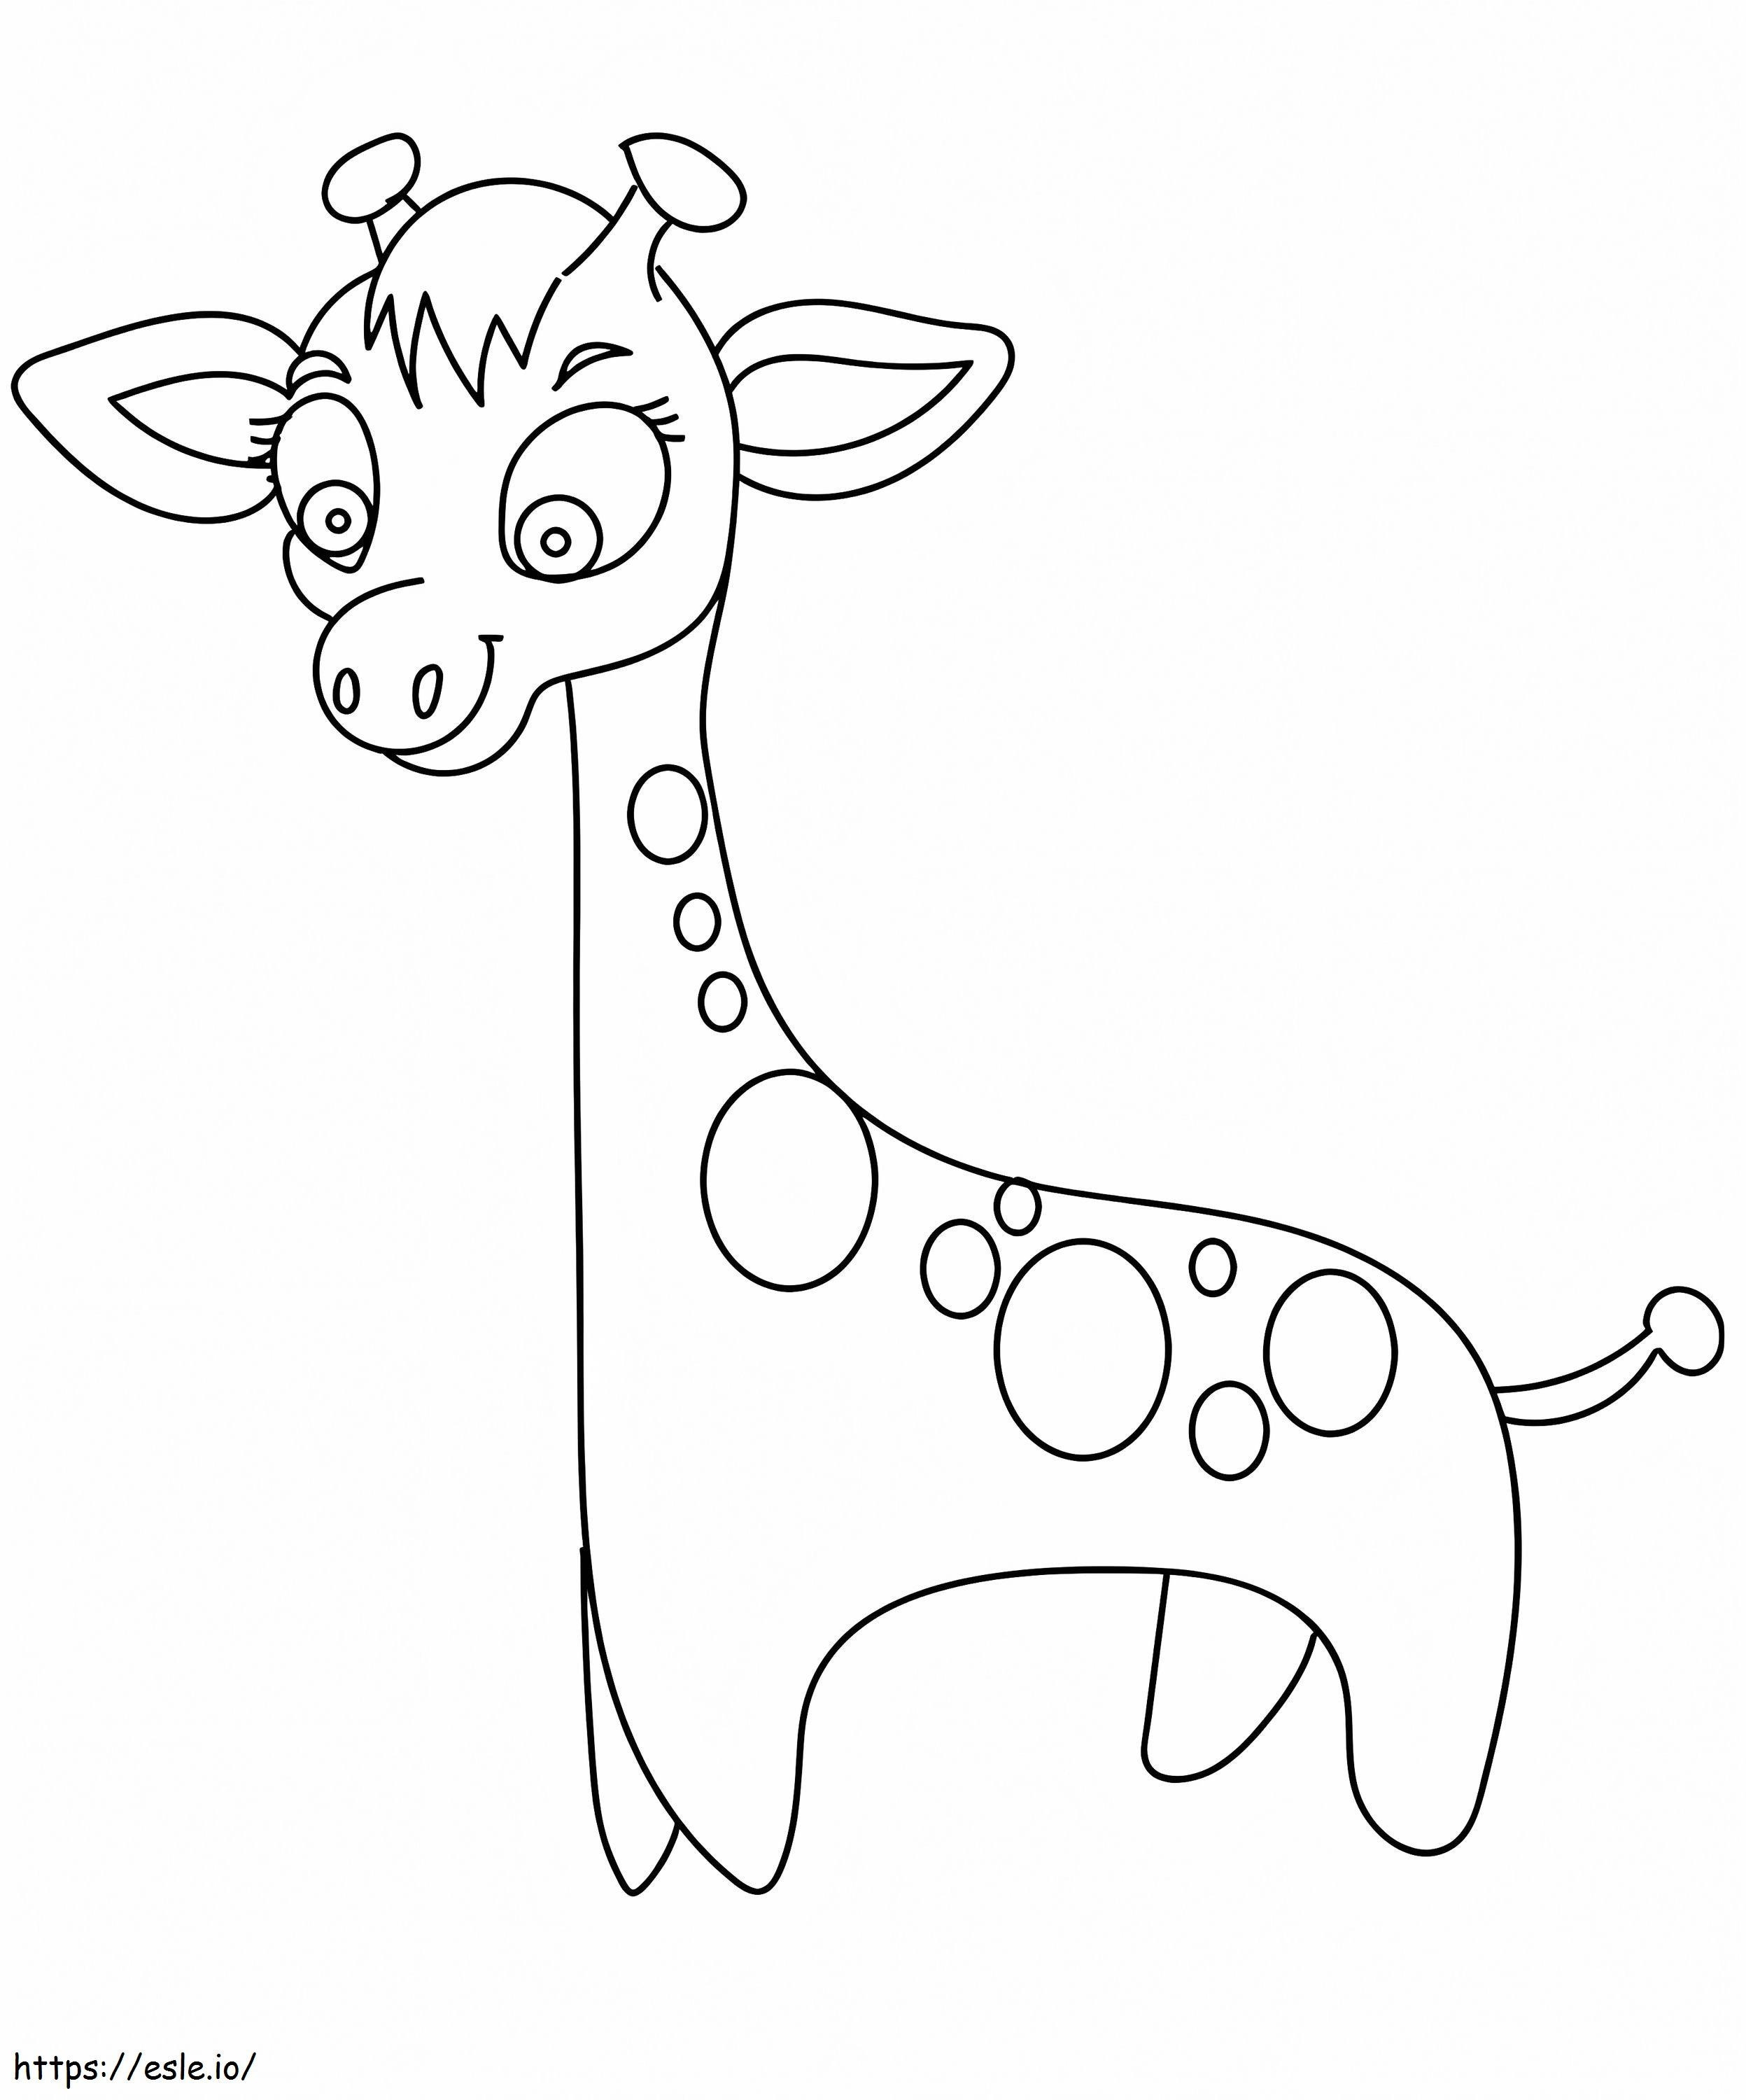 Coloriage Girafe facile à imprimer dessin